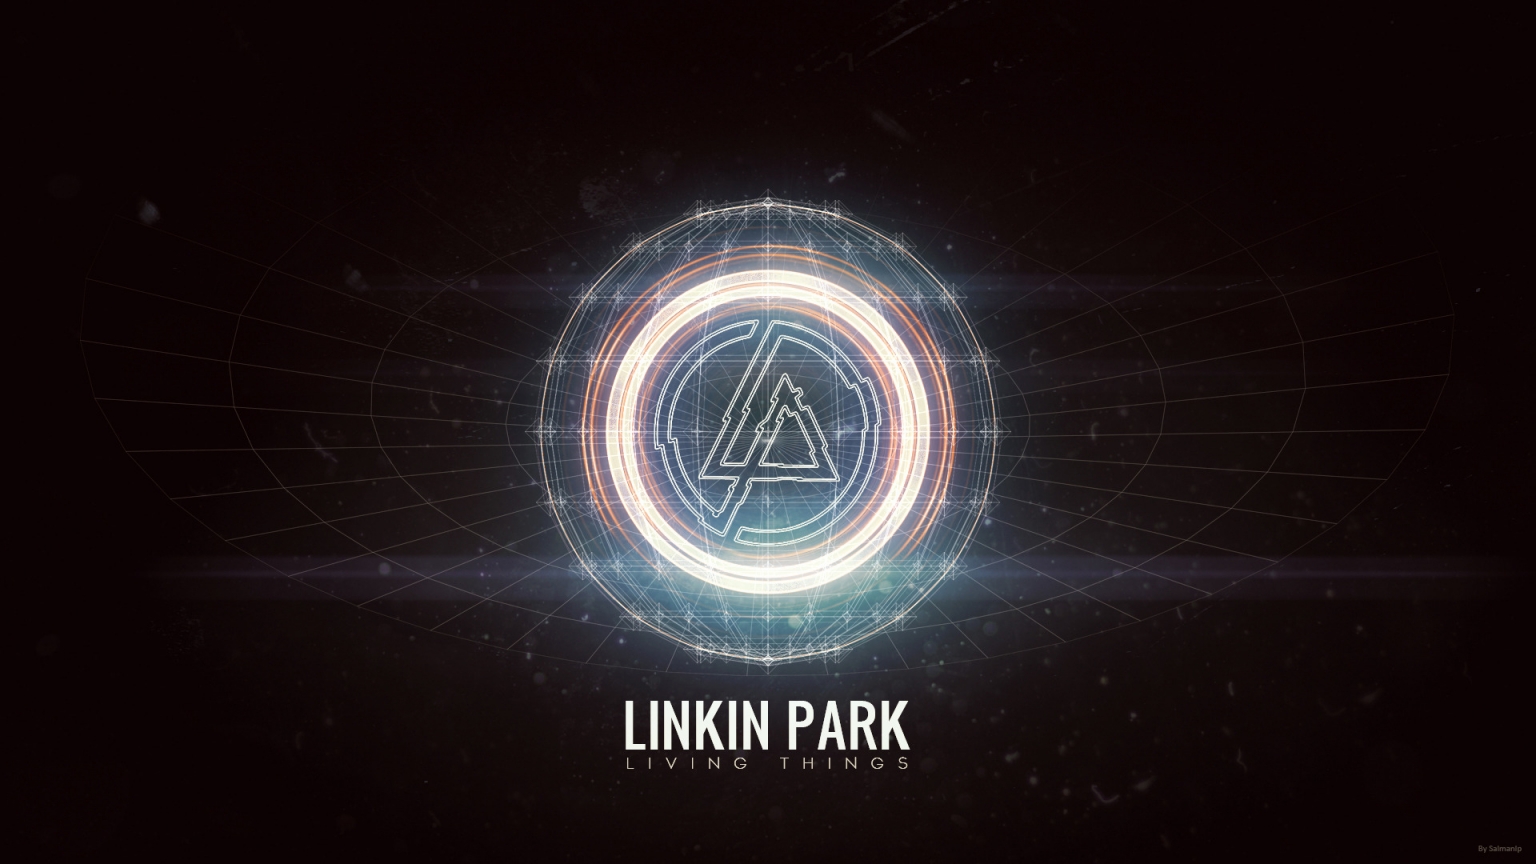 Linkin Park Living Things for 1536 x 864 HDTV resolution